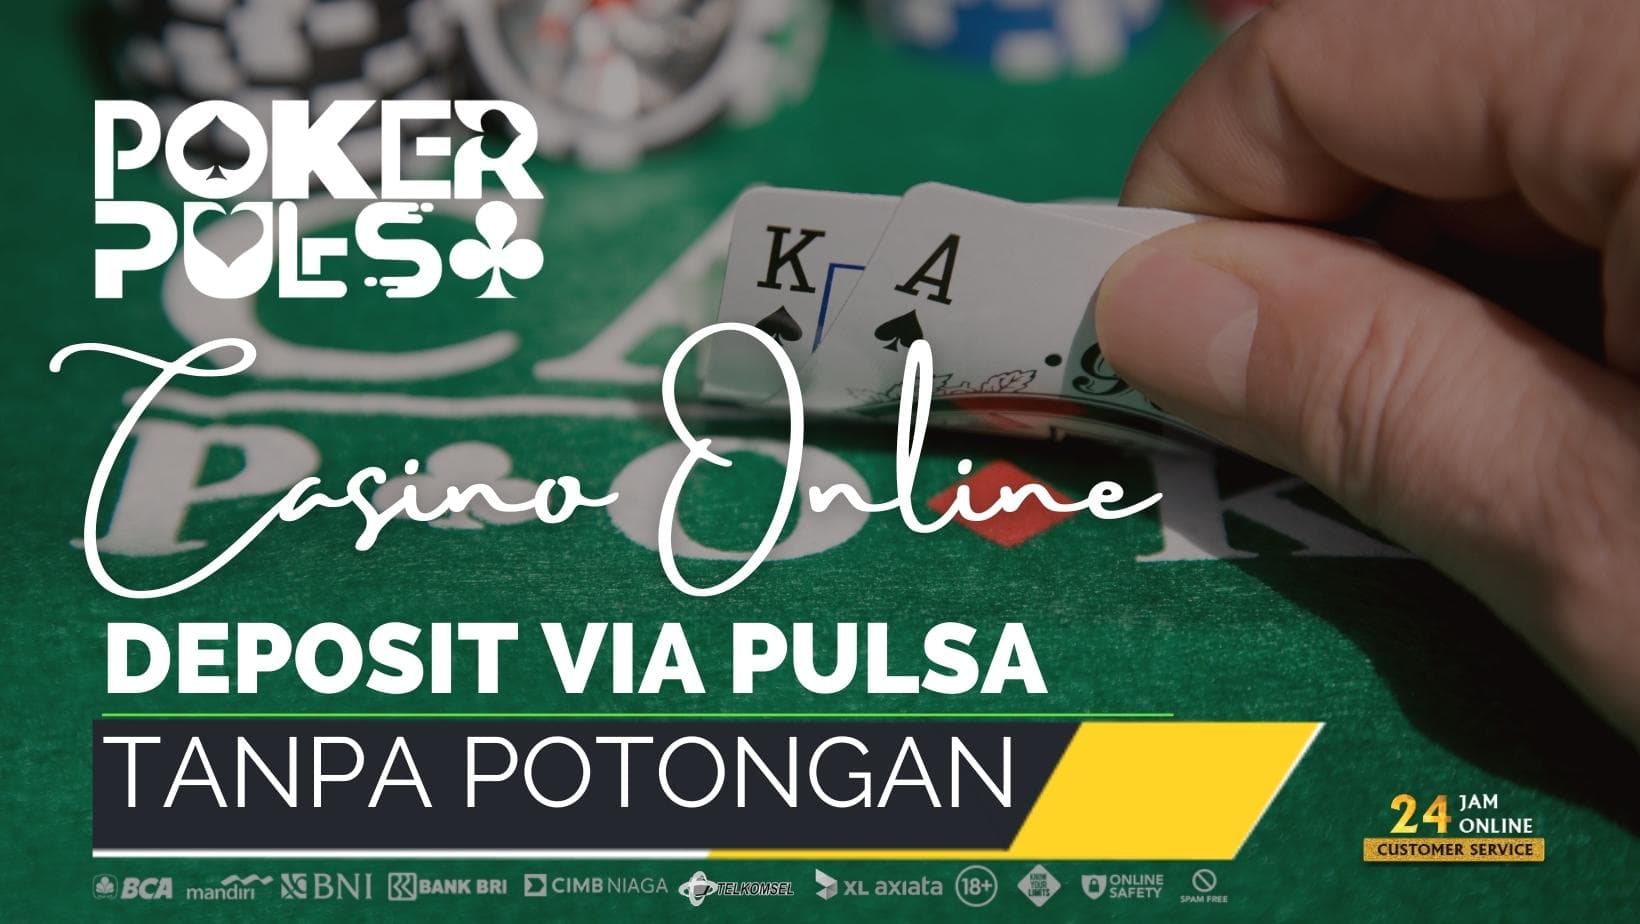 poker-pulsa-casino-online.jpeg?bbe8d7f14c4eb78db1591a17e2703ed1